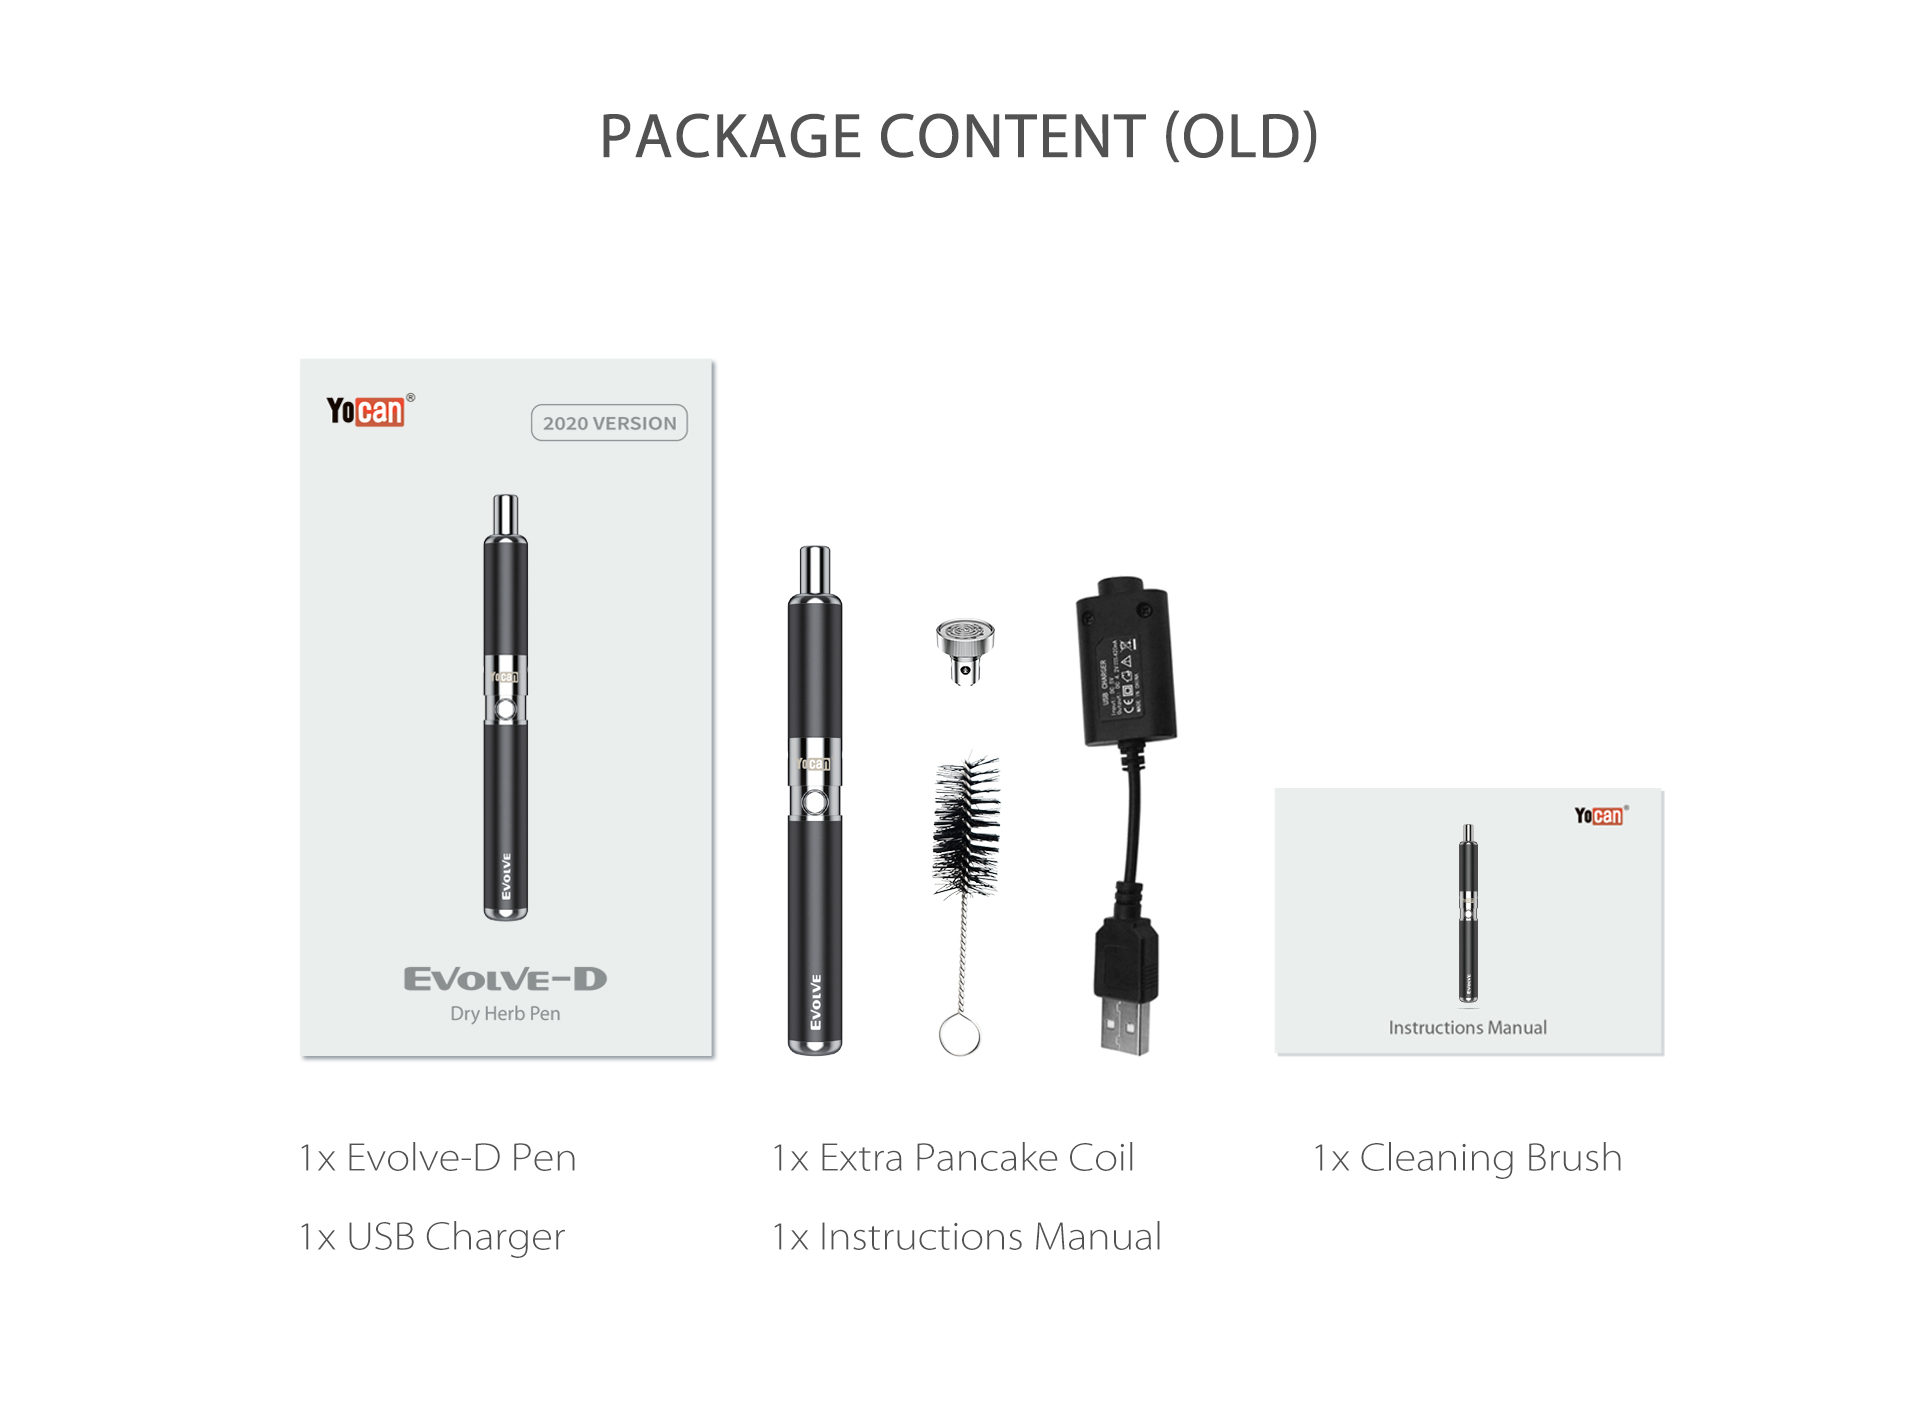 Yocan Evolve-D vaporizer pen package content.